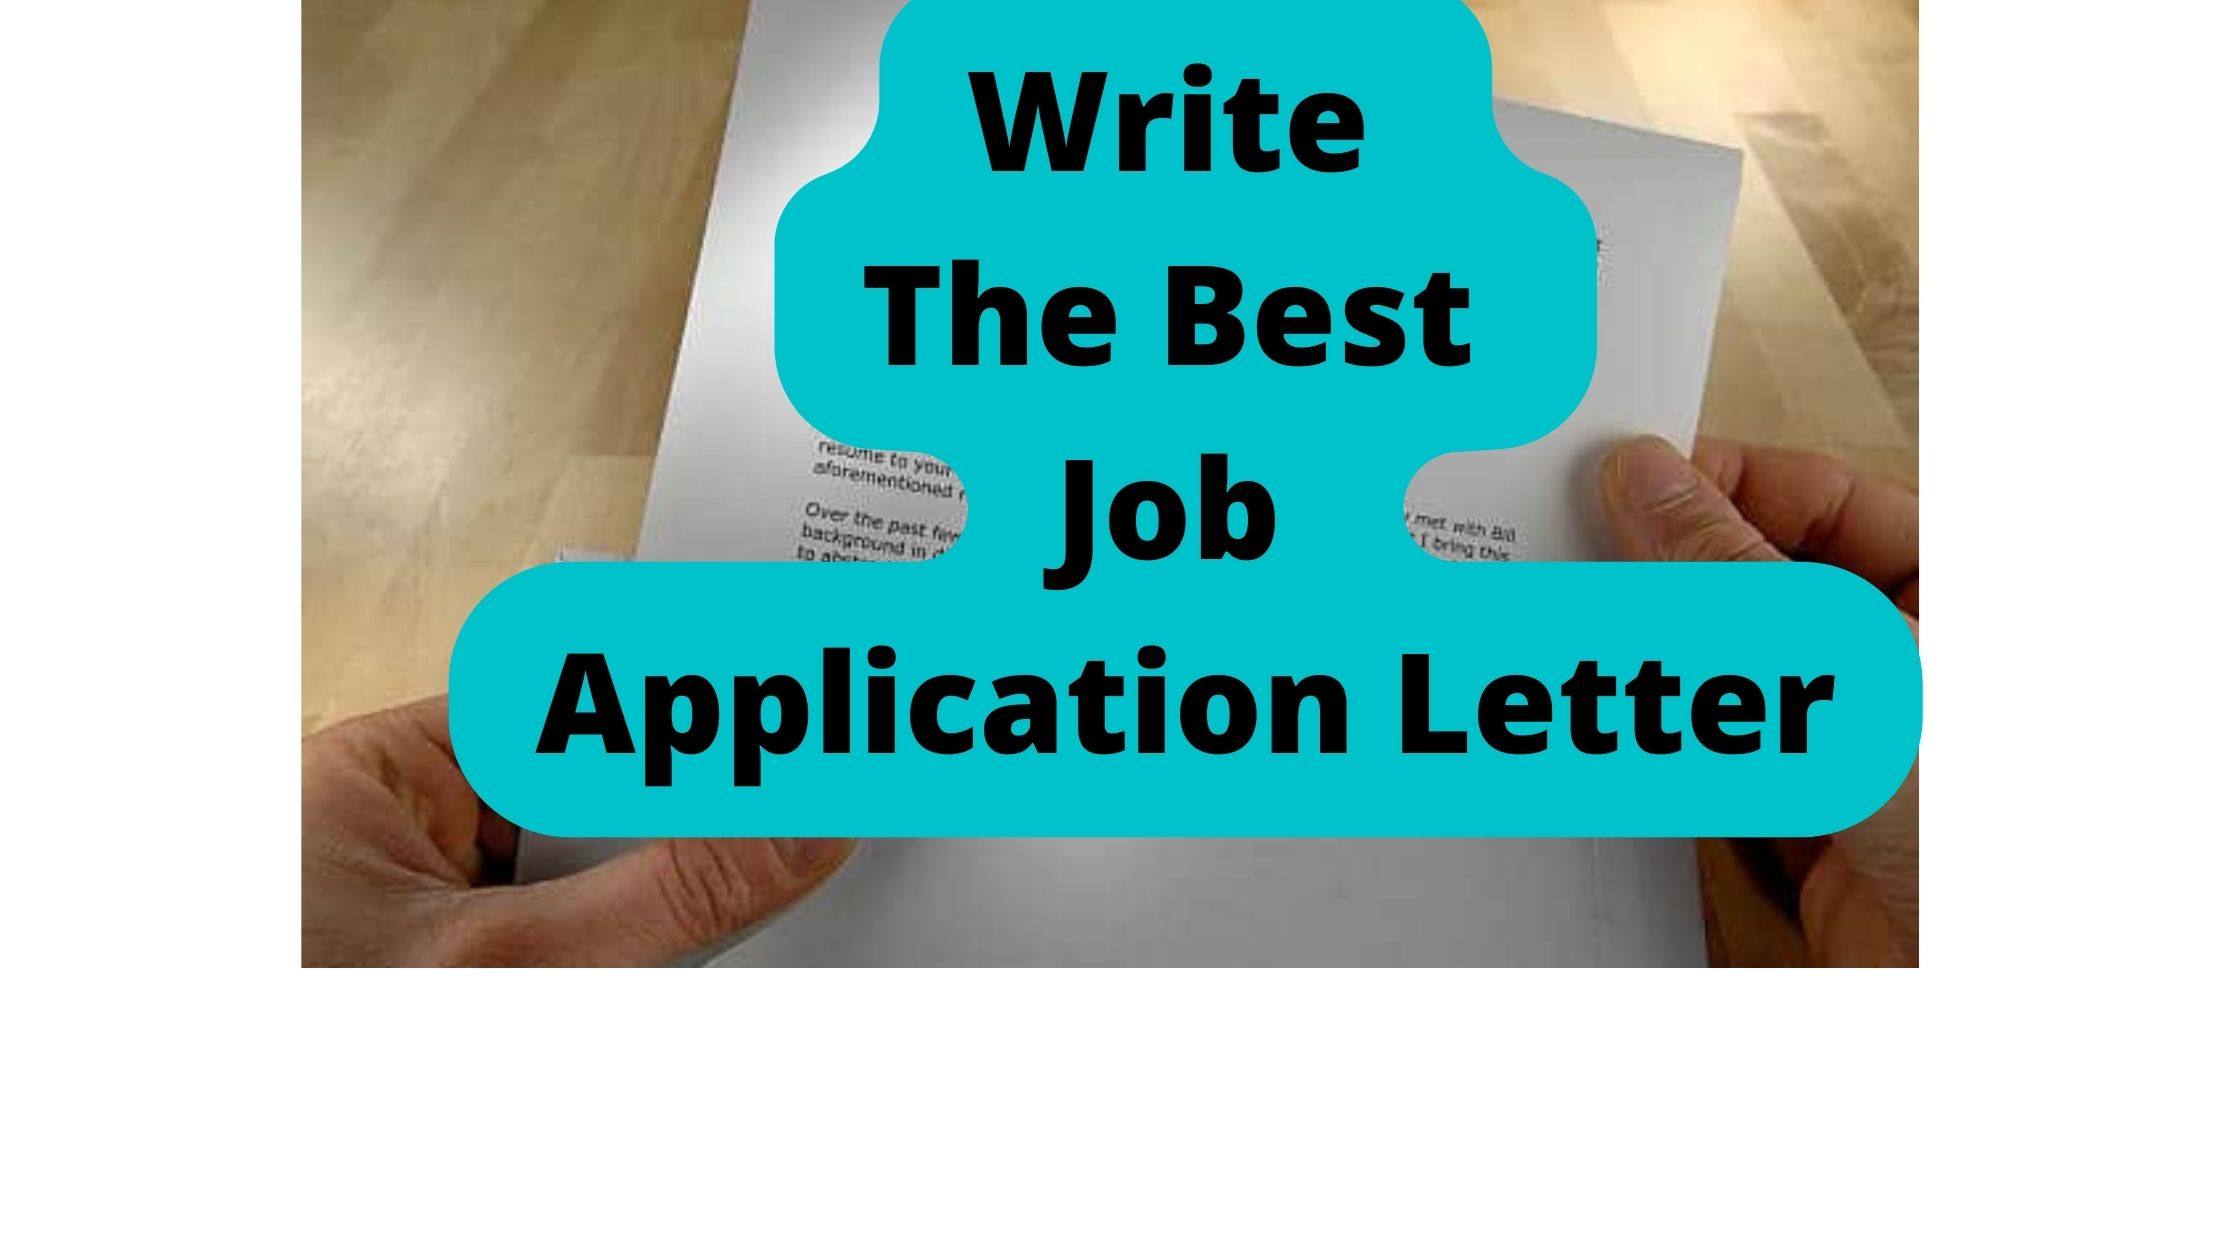 Write The Best Job Application Letter